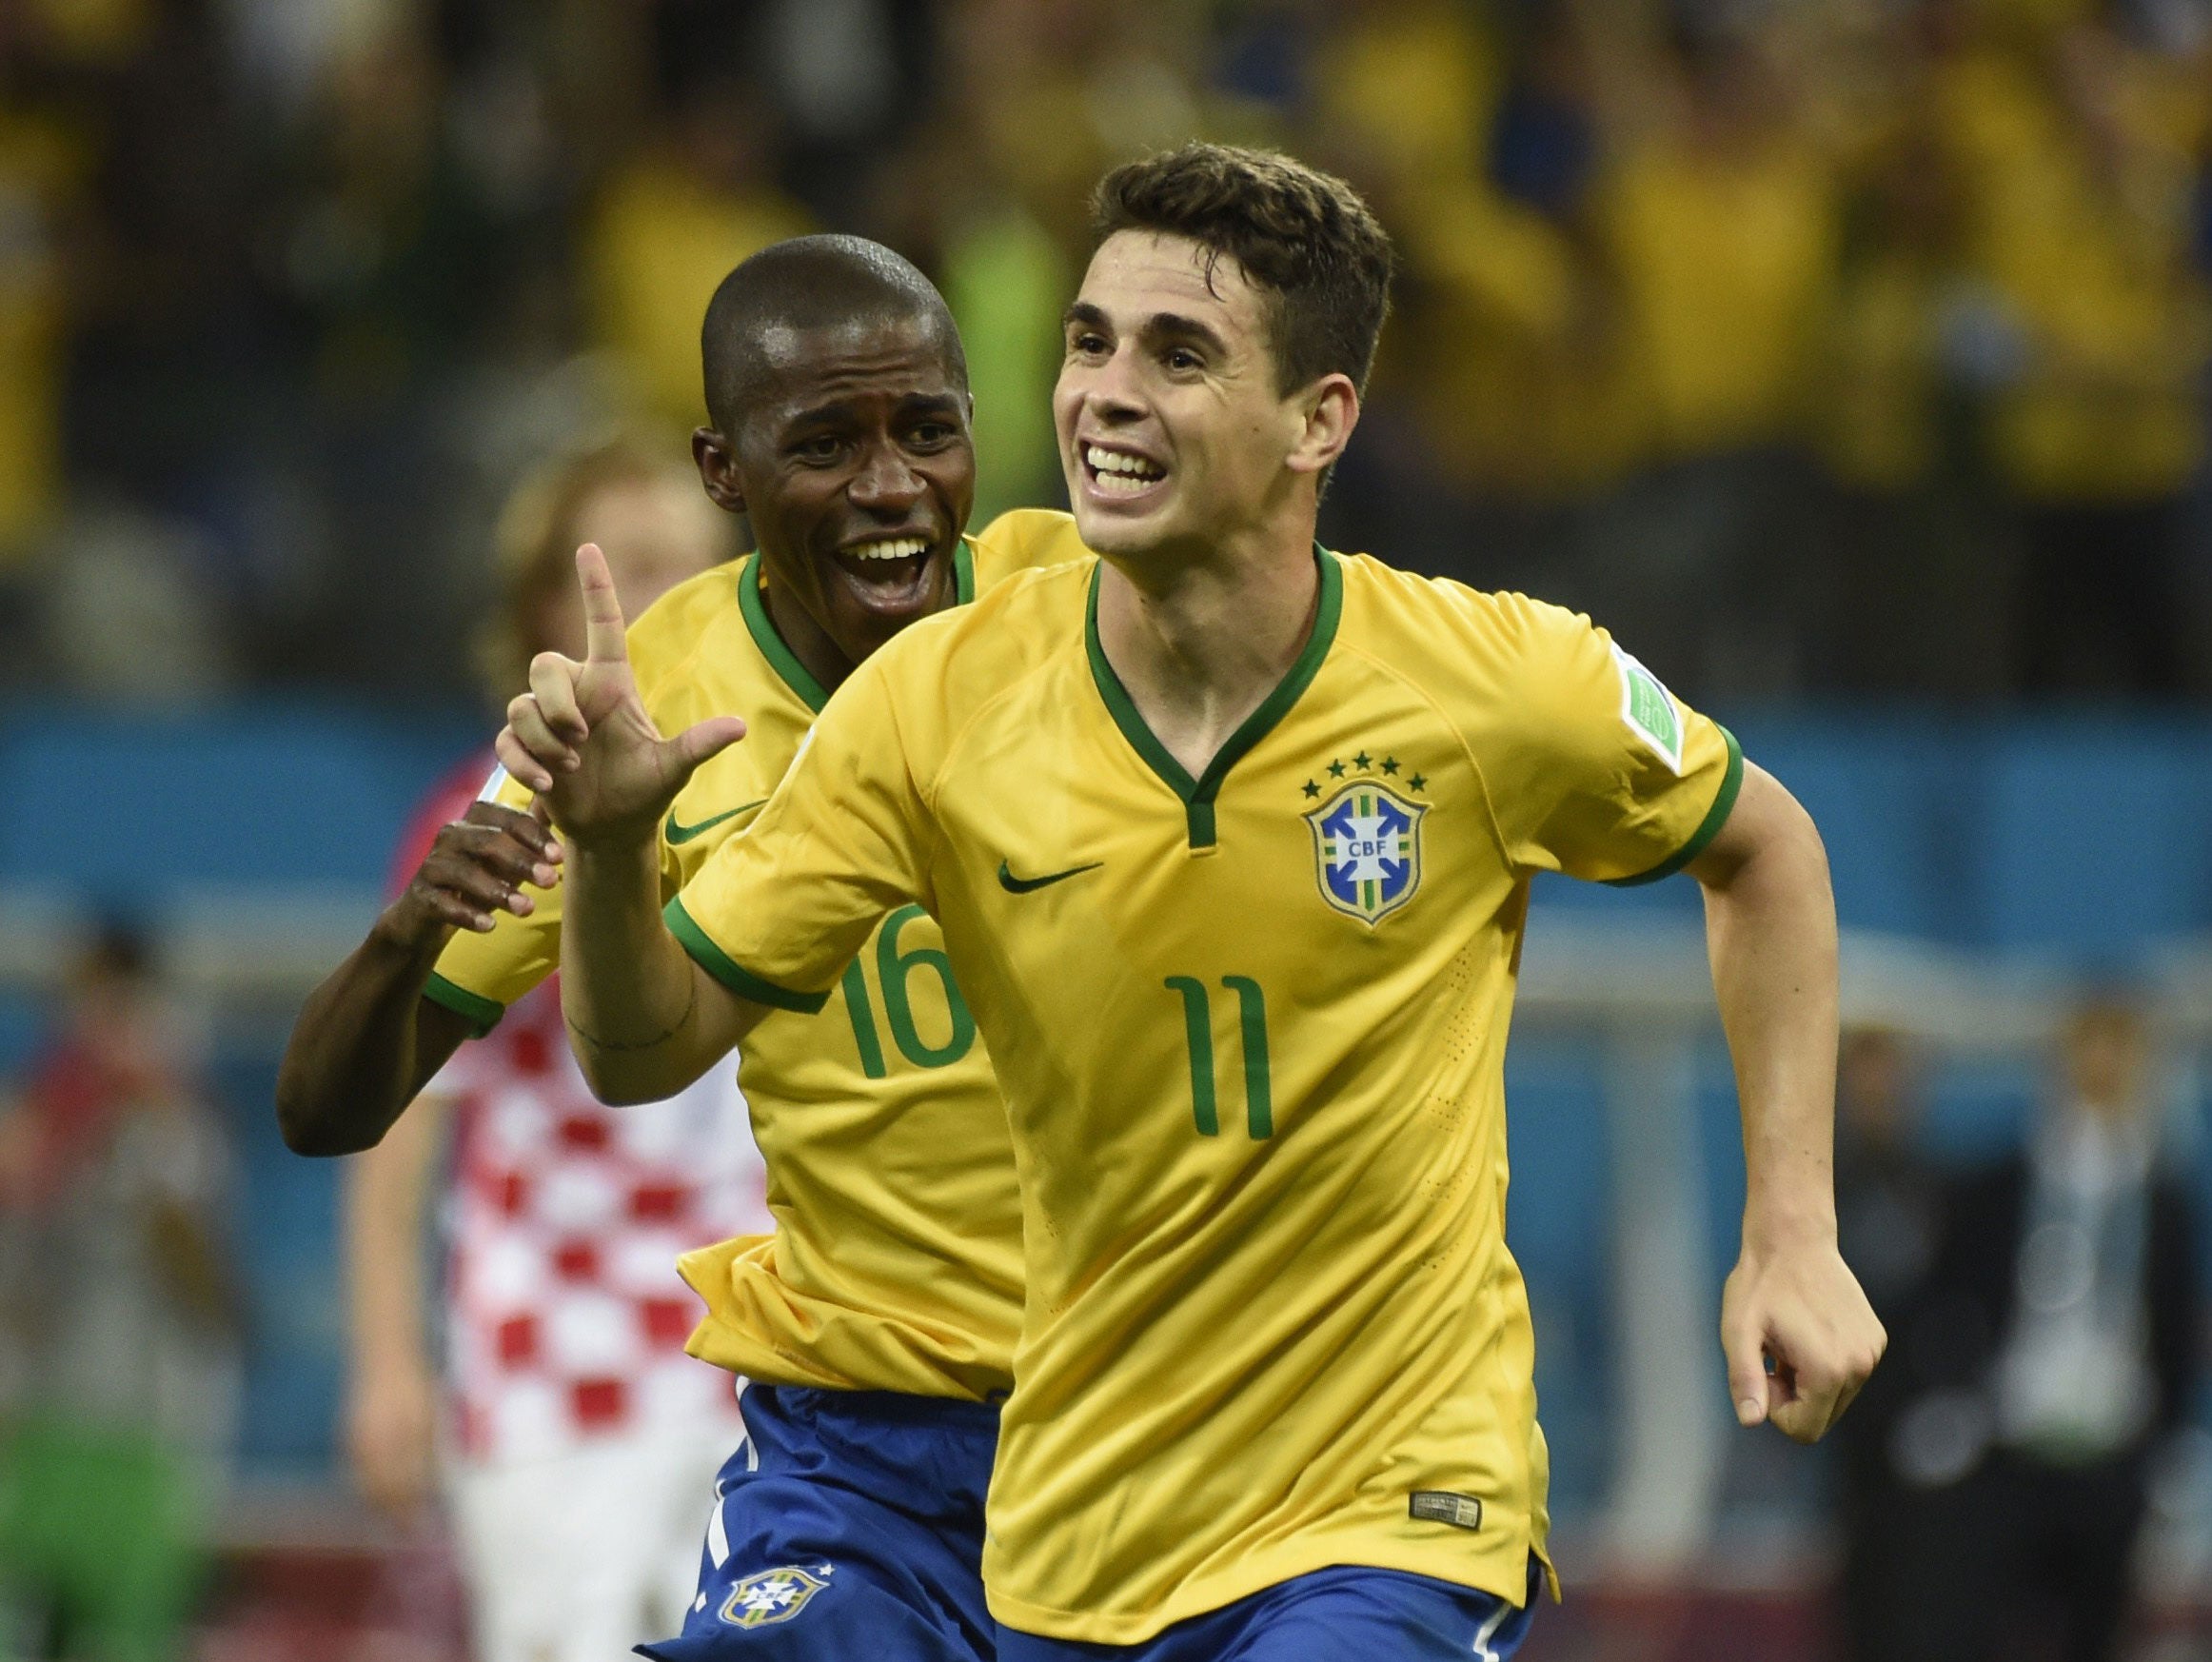 Oscar got everything moving for Brazil